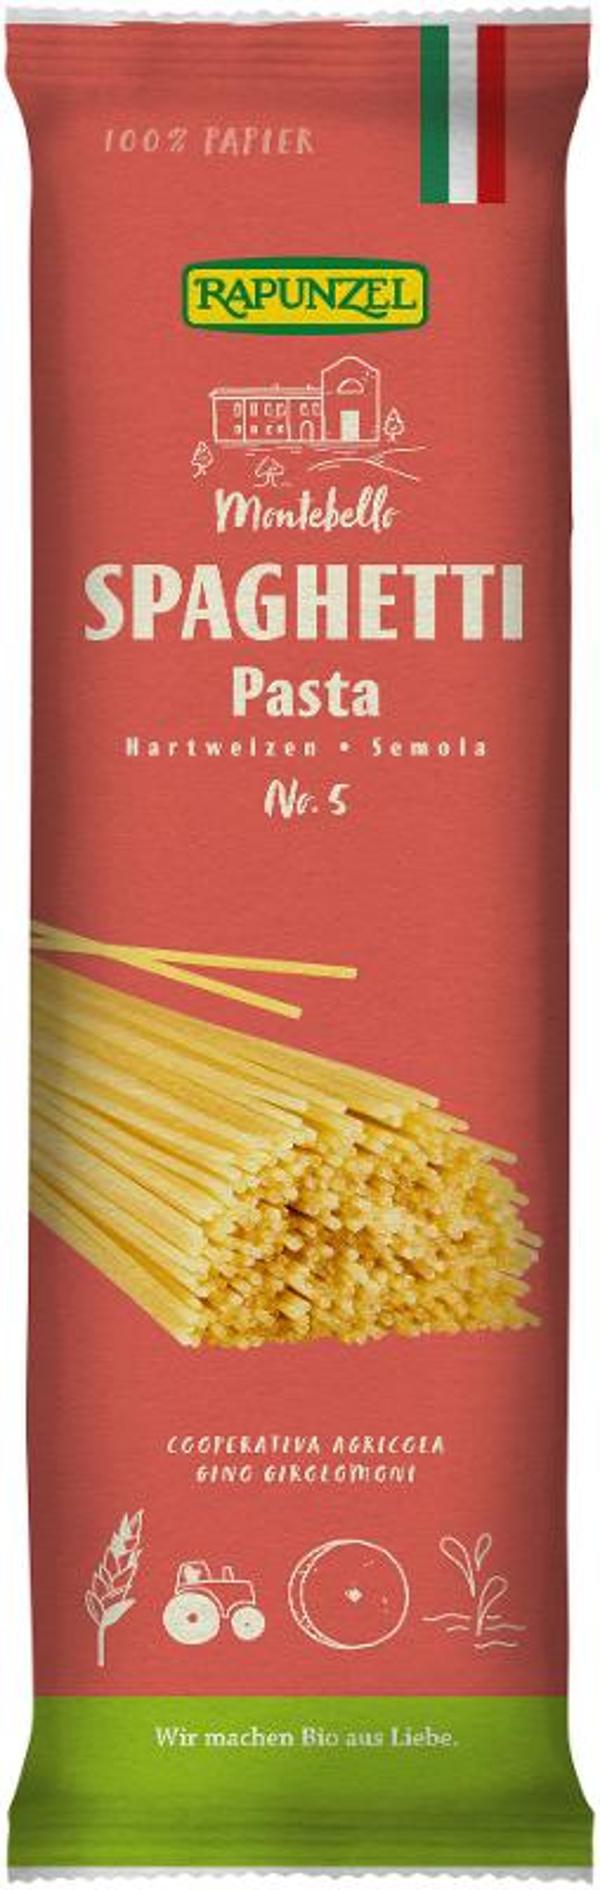 Produktfoto zu Spaghetti Semola no.5  500g